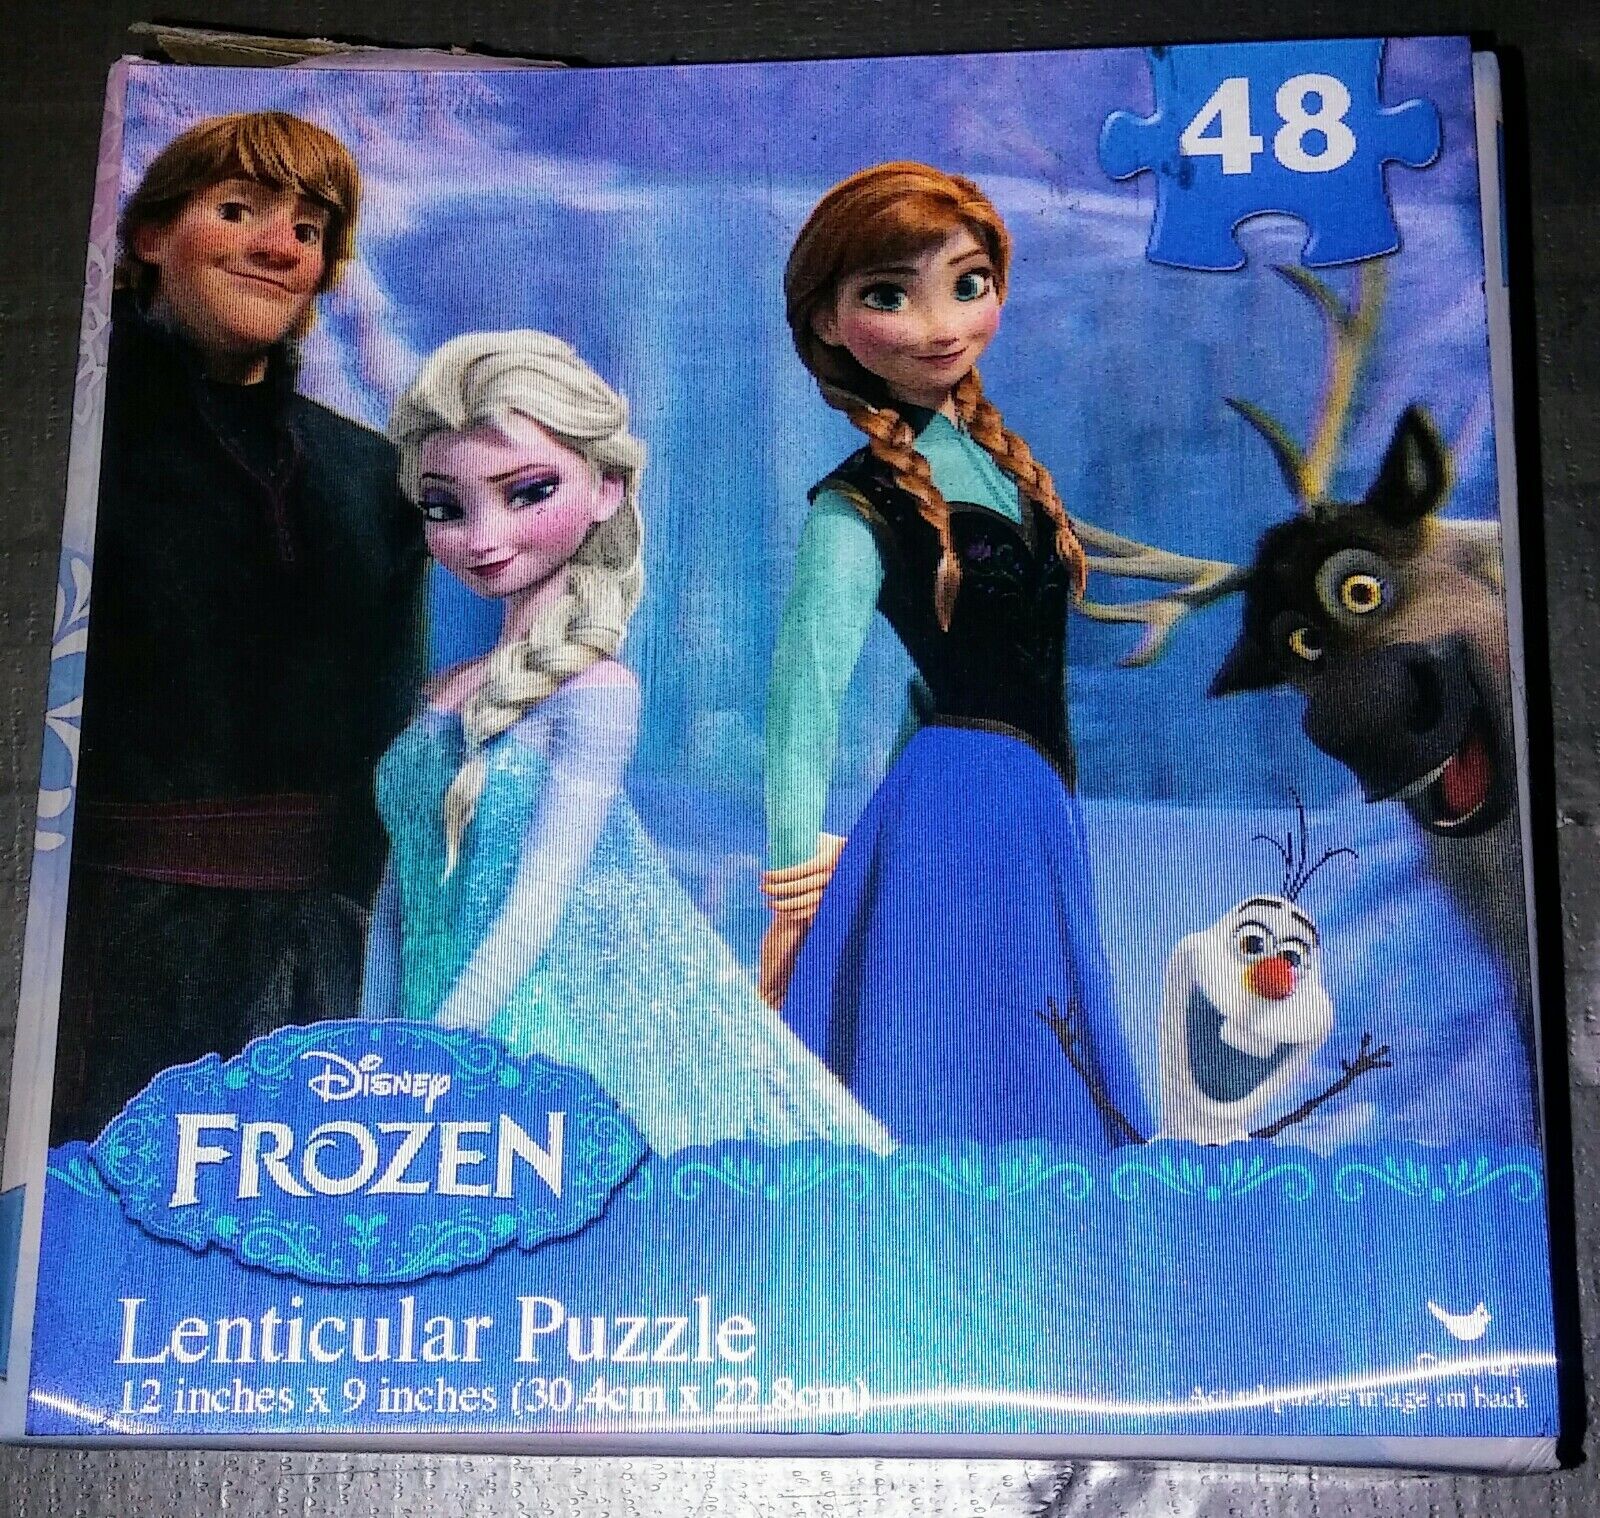 Assimilatie Autonoom Vernauwd Disney's Frozen Lenticular Jigsaw Puzzle with 48 Pieces. Toy. | eBay